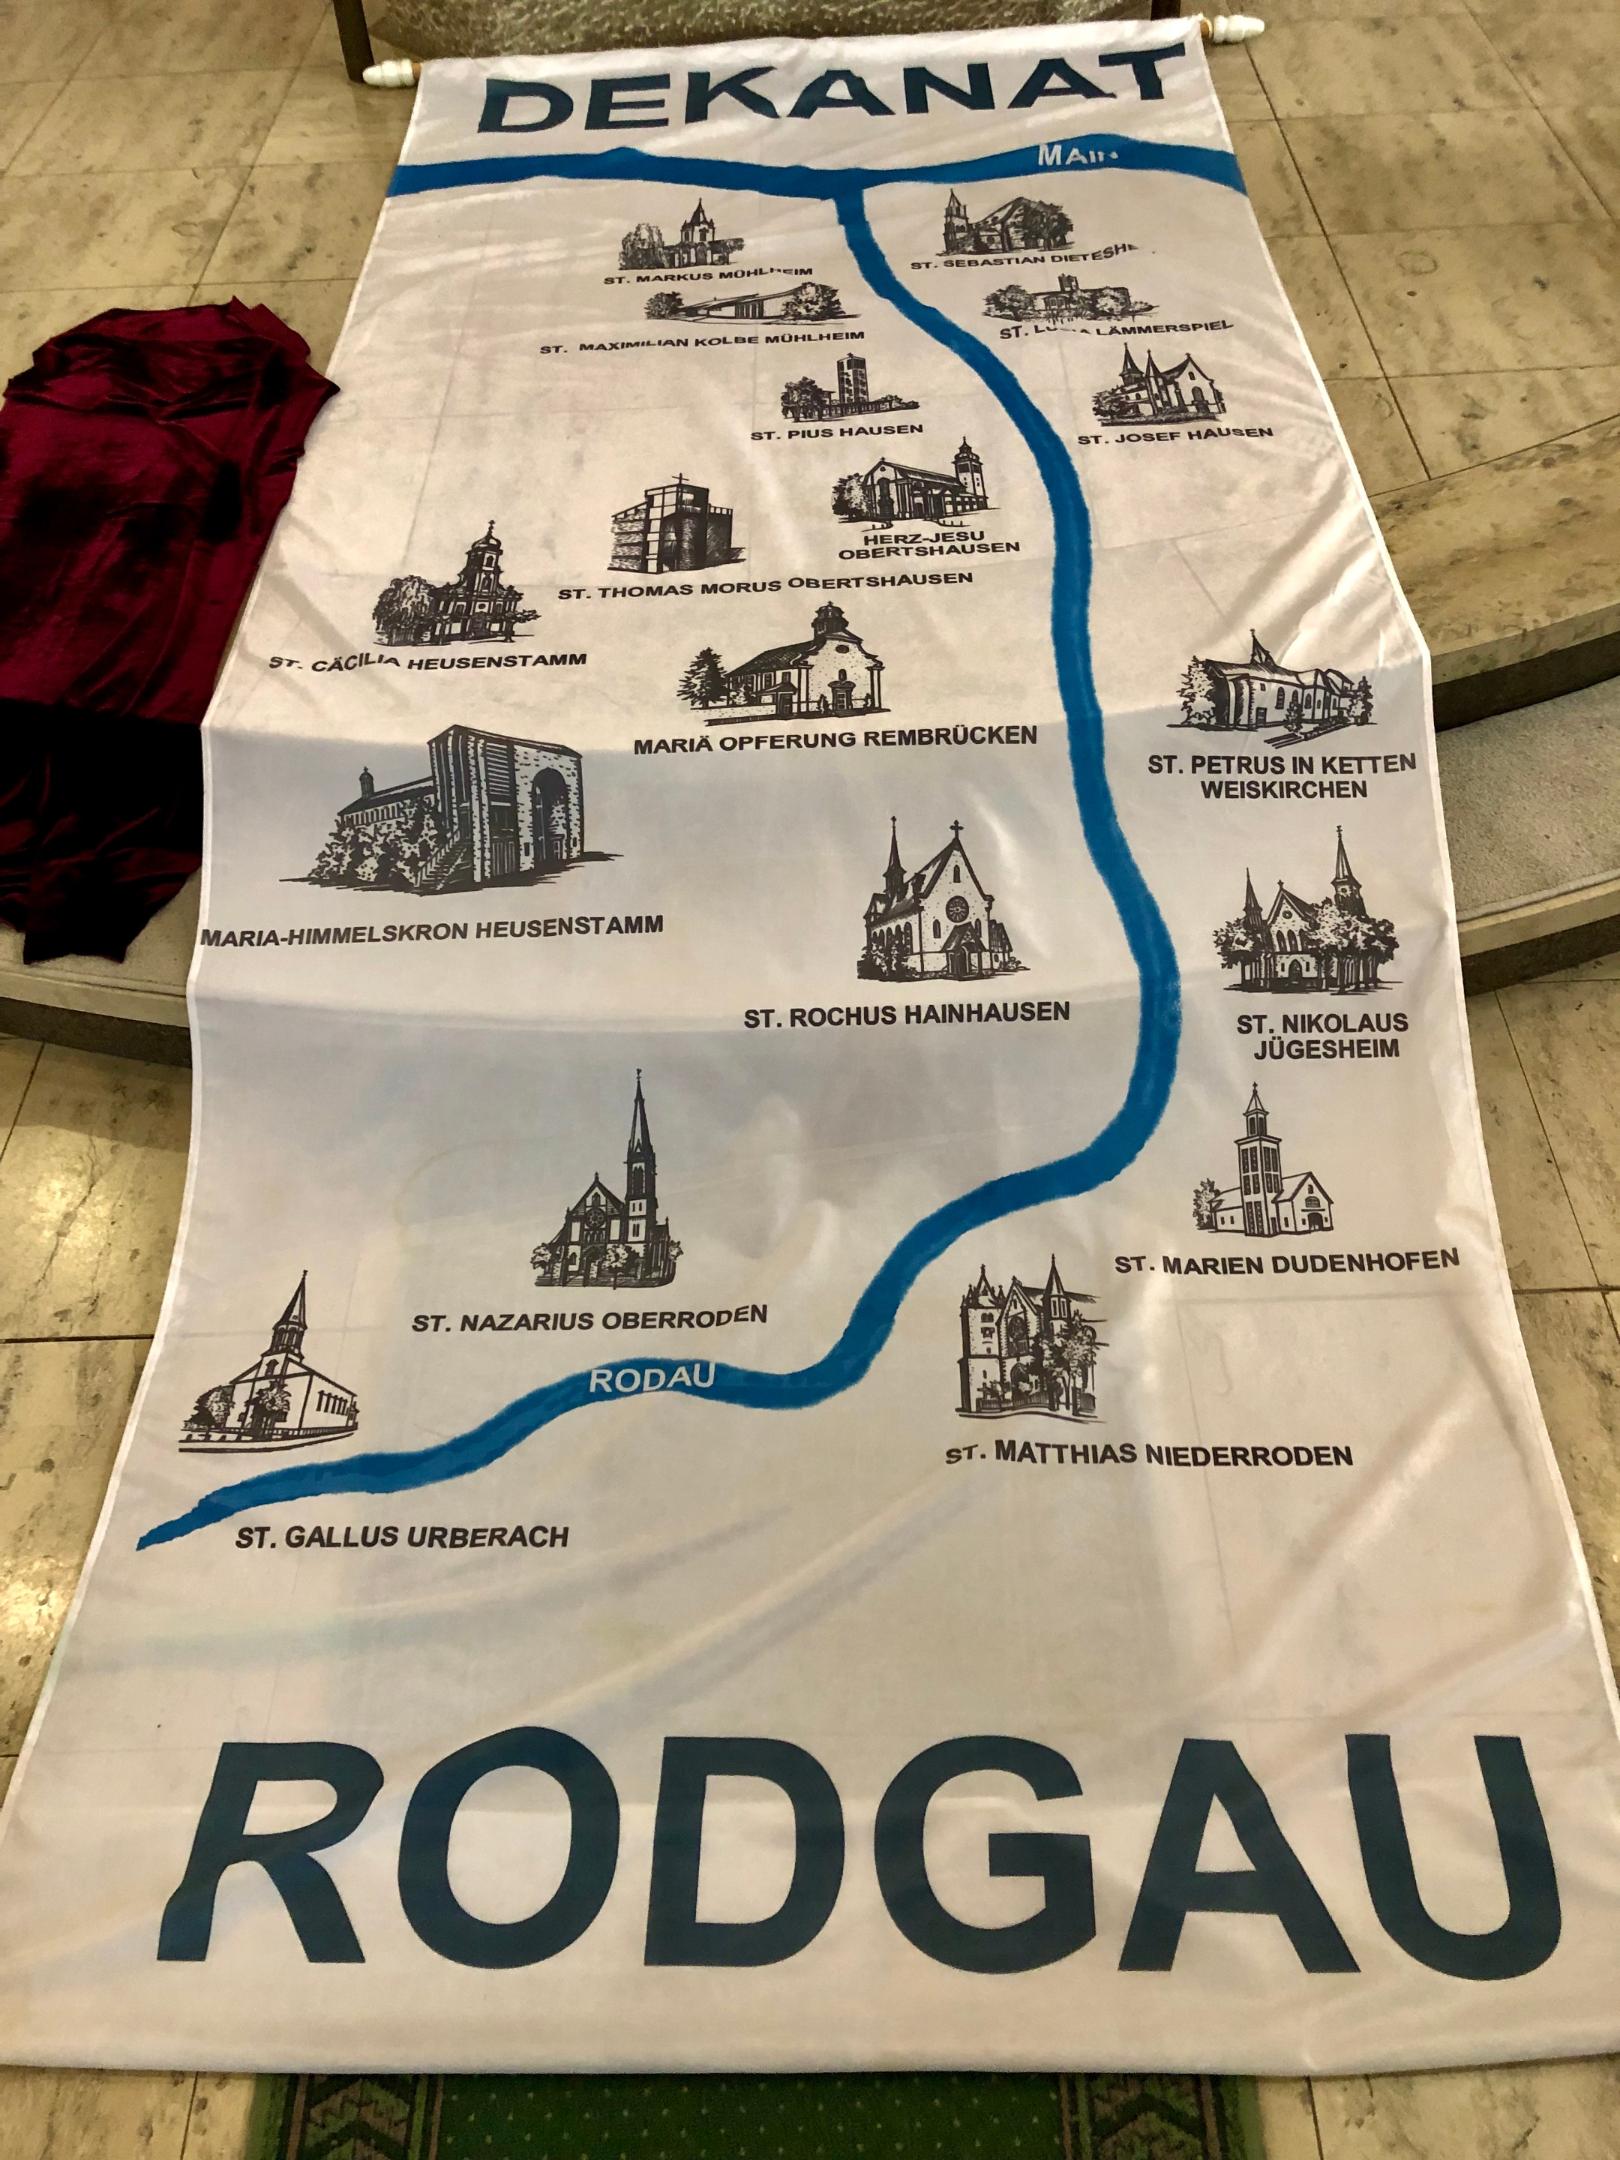 Dekanat Banner (c) Dekanat Rodgau